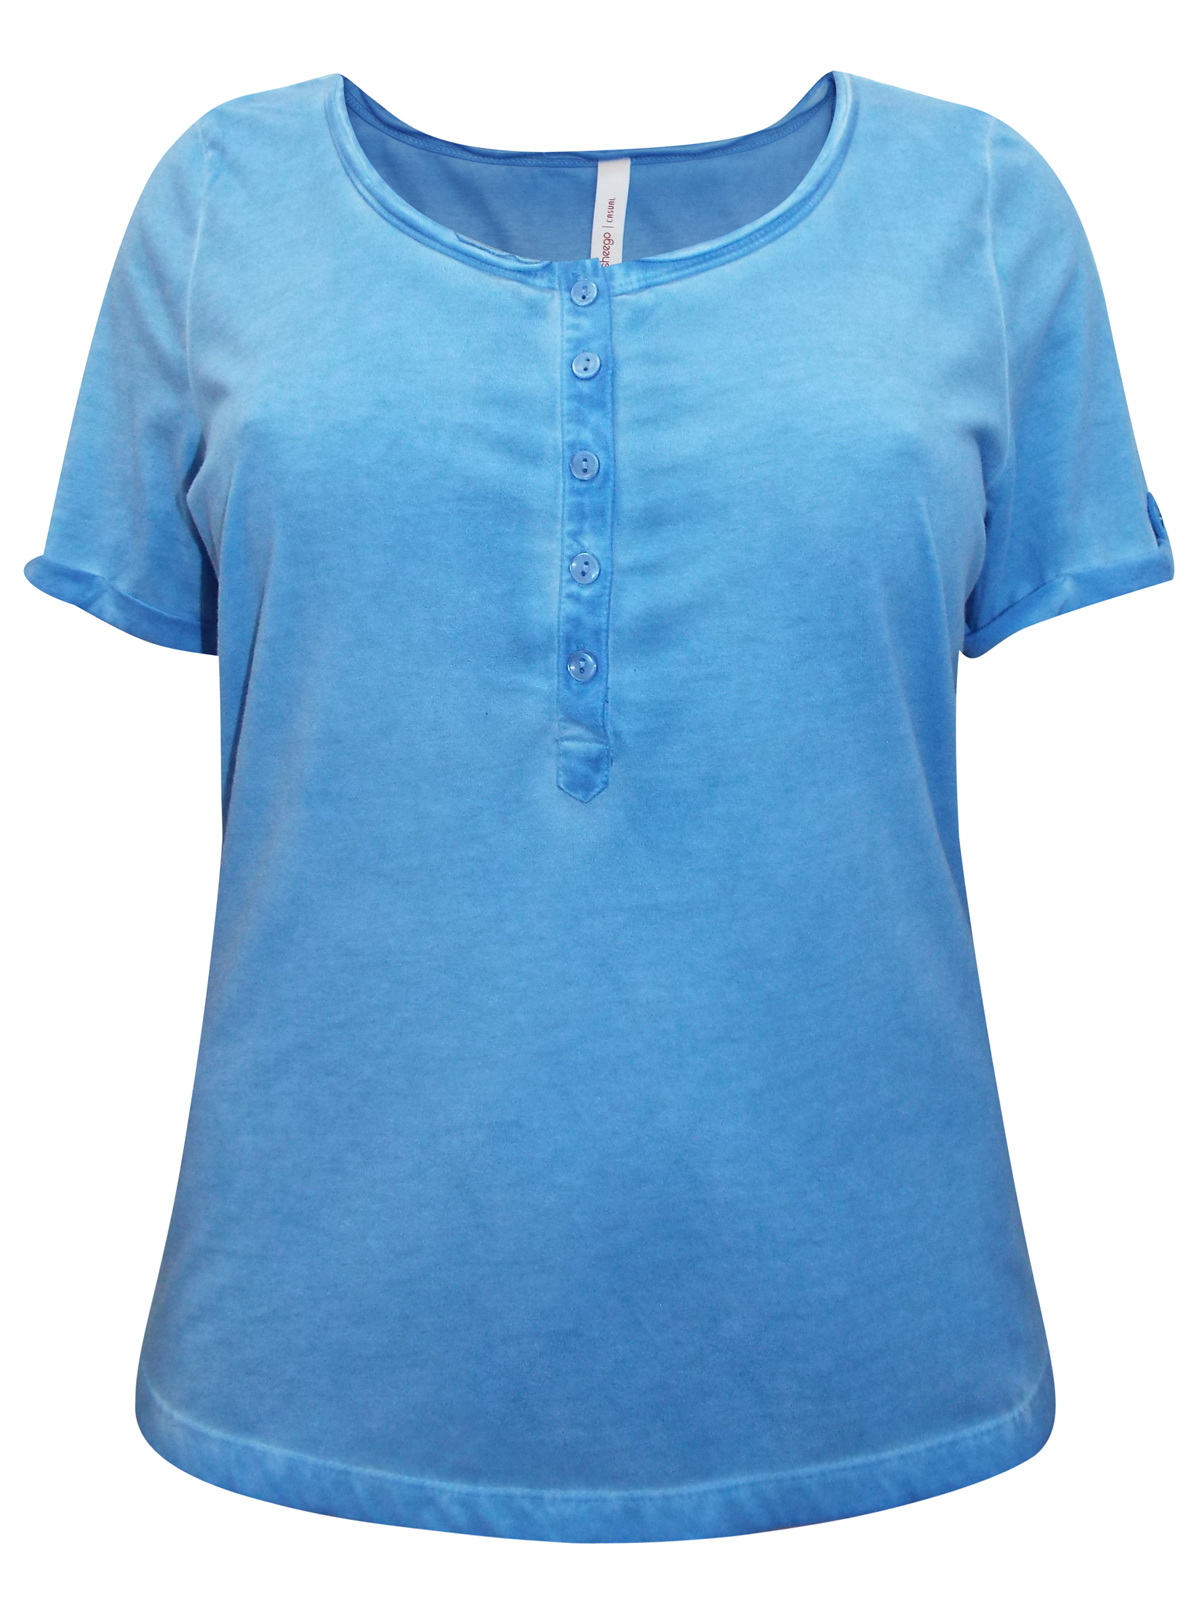 Wholesale Designer Plus Size Clothing by Sheego - - Sheego BLUE Cotton ...